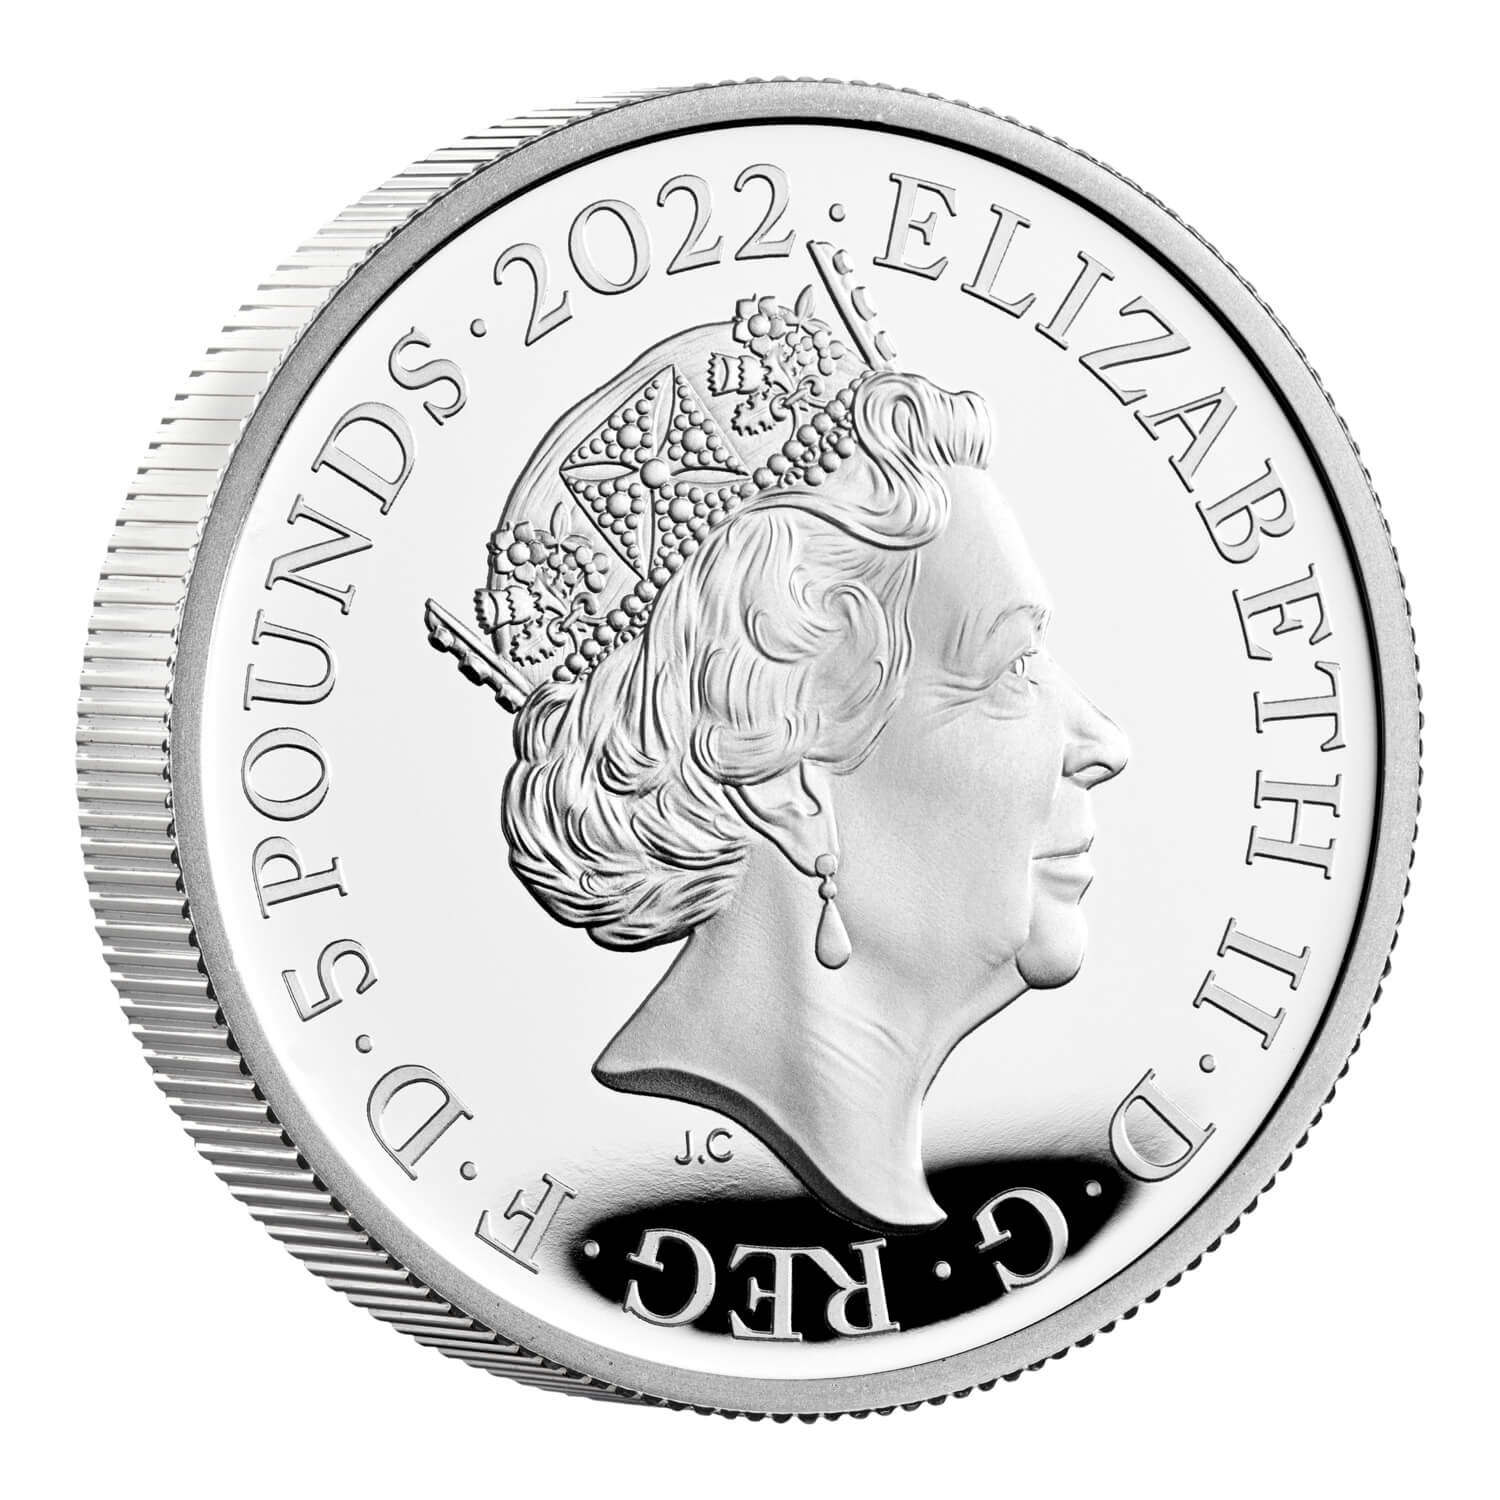 (W185.5.P.2022.UK22E7S2O) 5 Pounds UK 2022 2 oz Proof silver - King Edward VII Obverse (zoom)